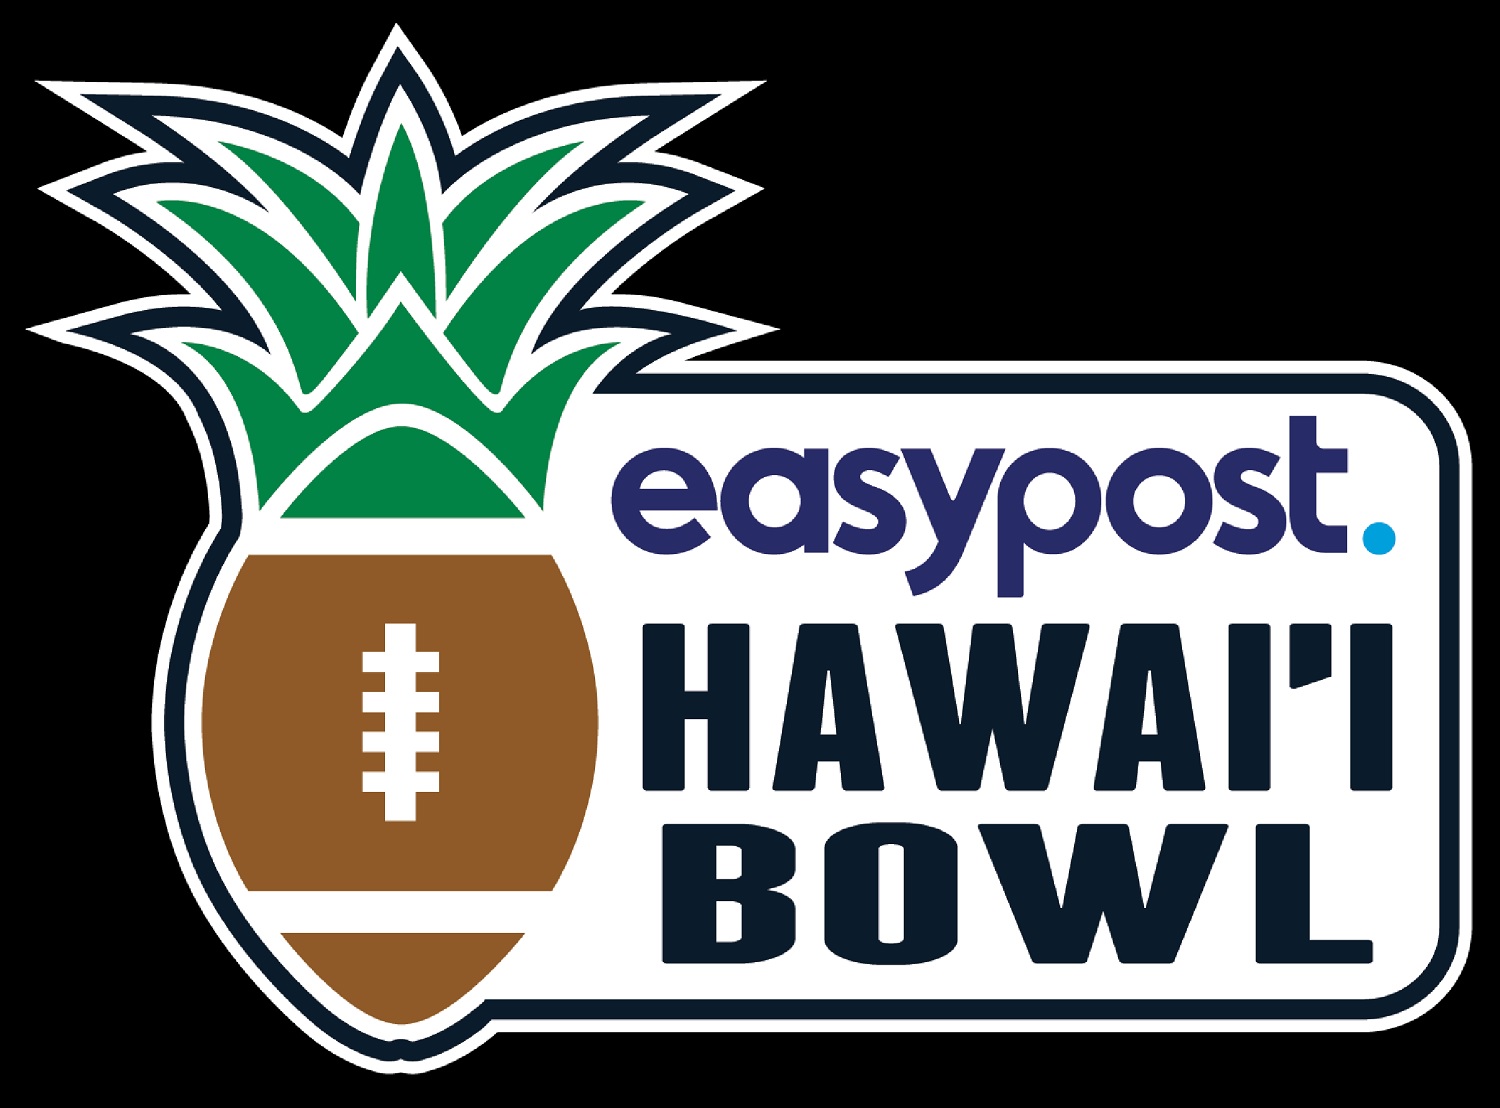 Hawaii Bowl sponsor hilariously live-tweets game despite cancellation